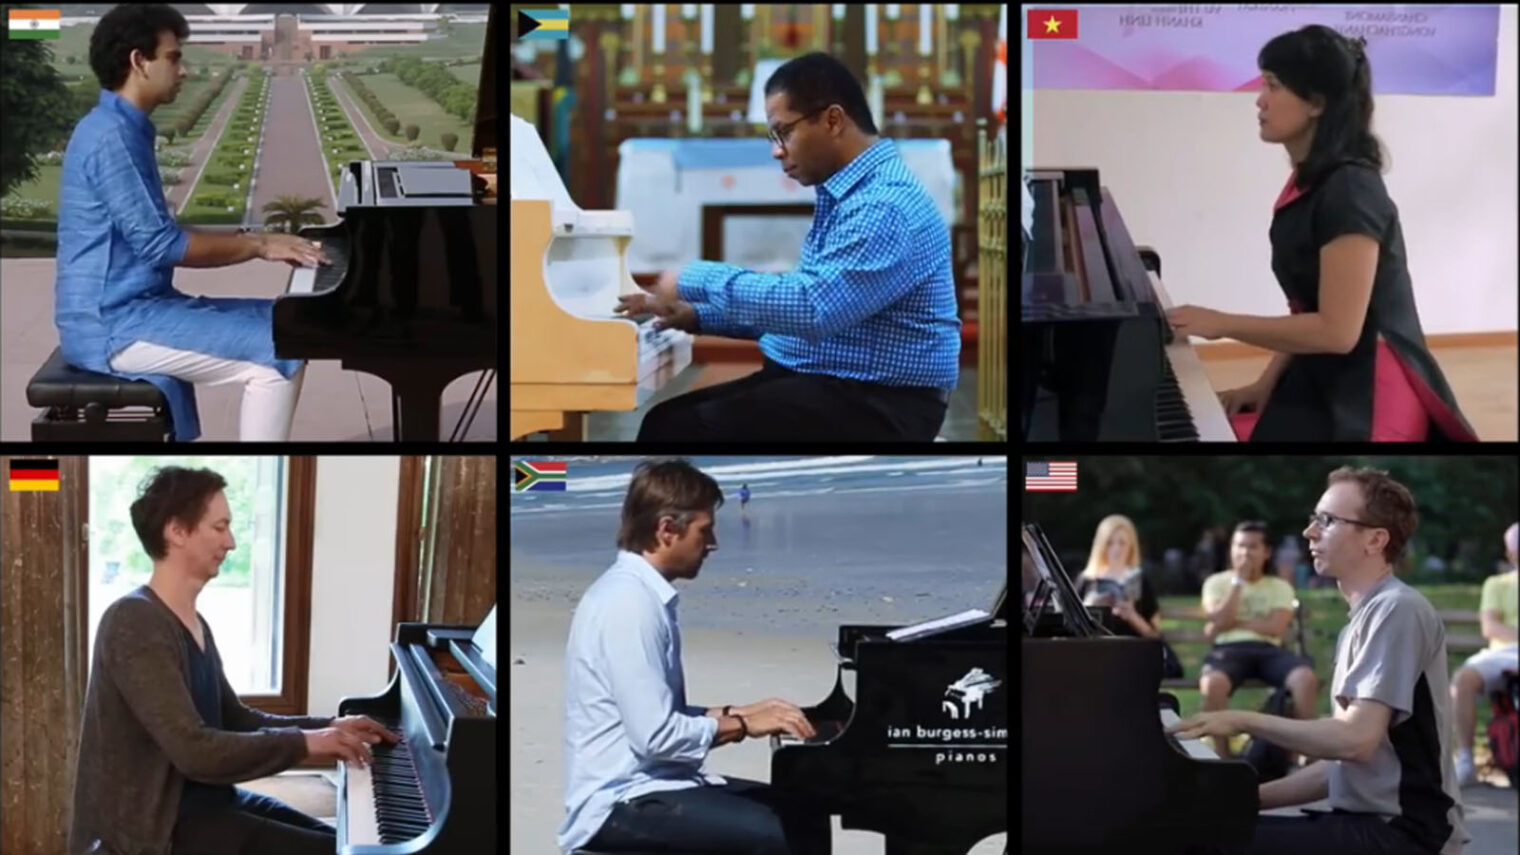 YouTube screenshot of “United Pianos.”